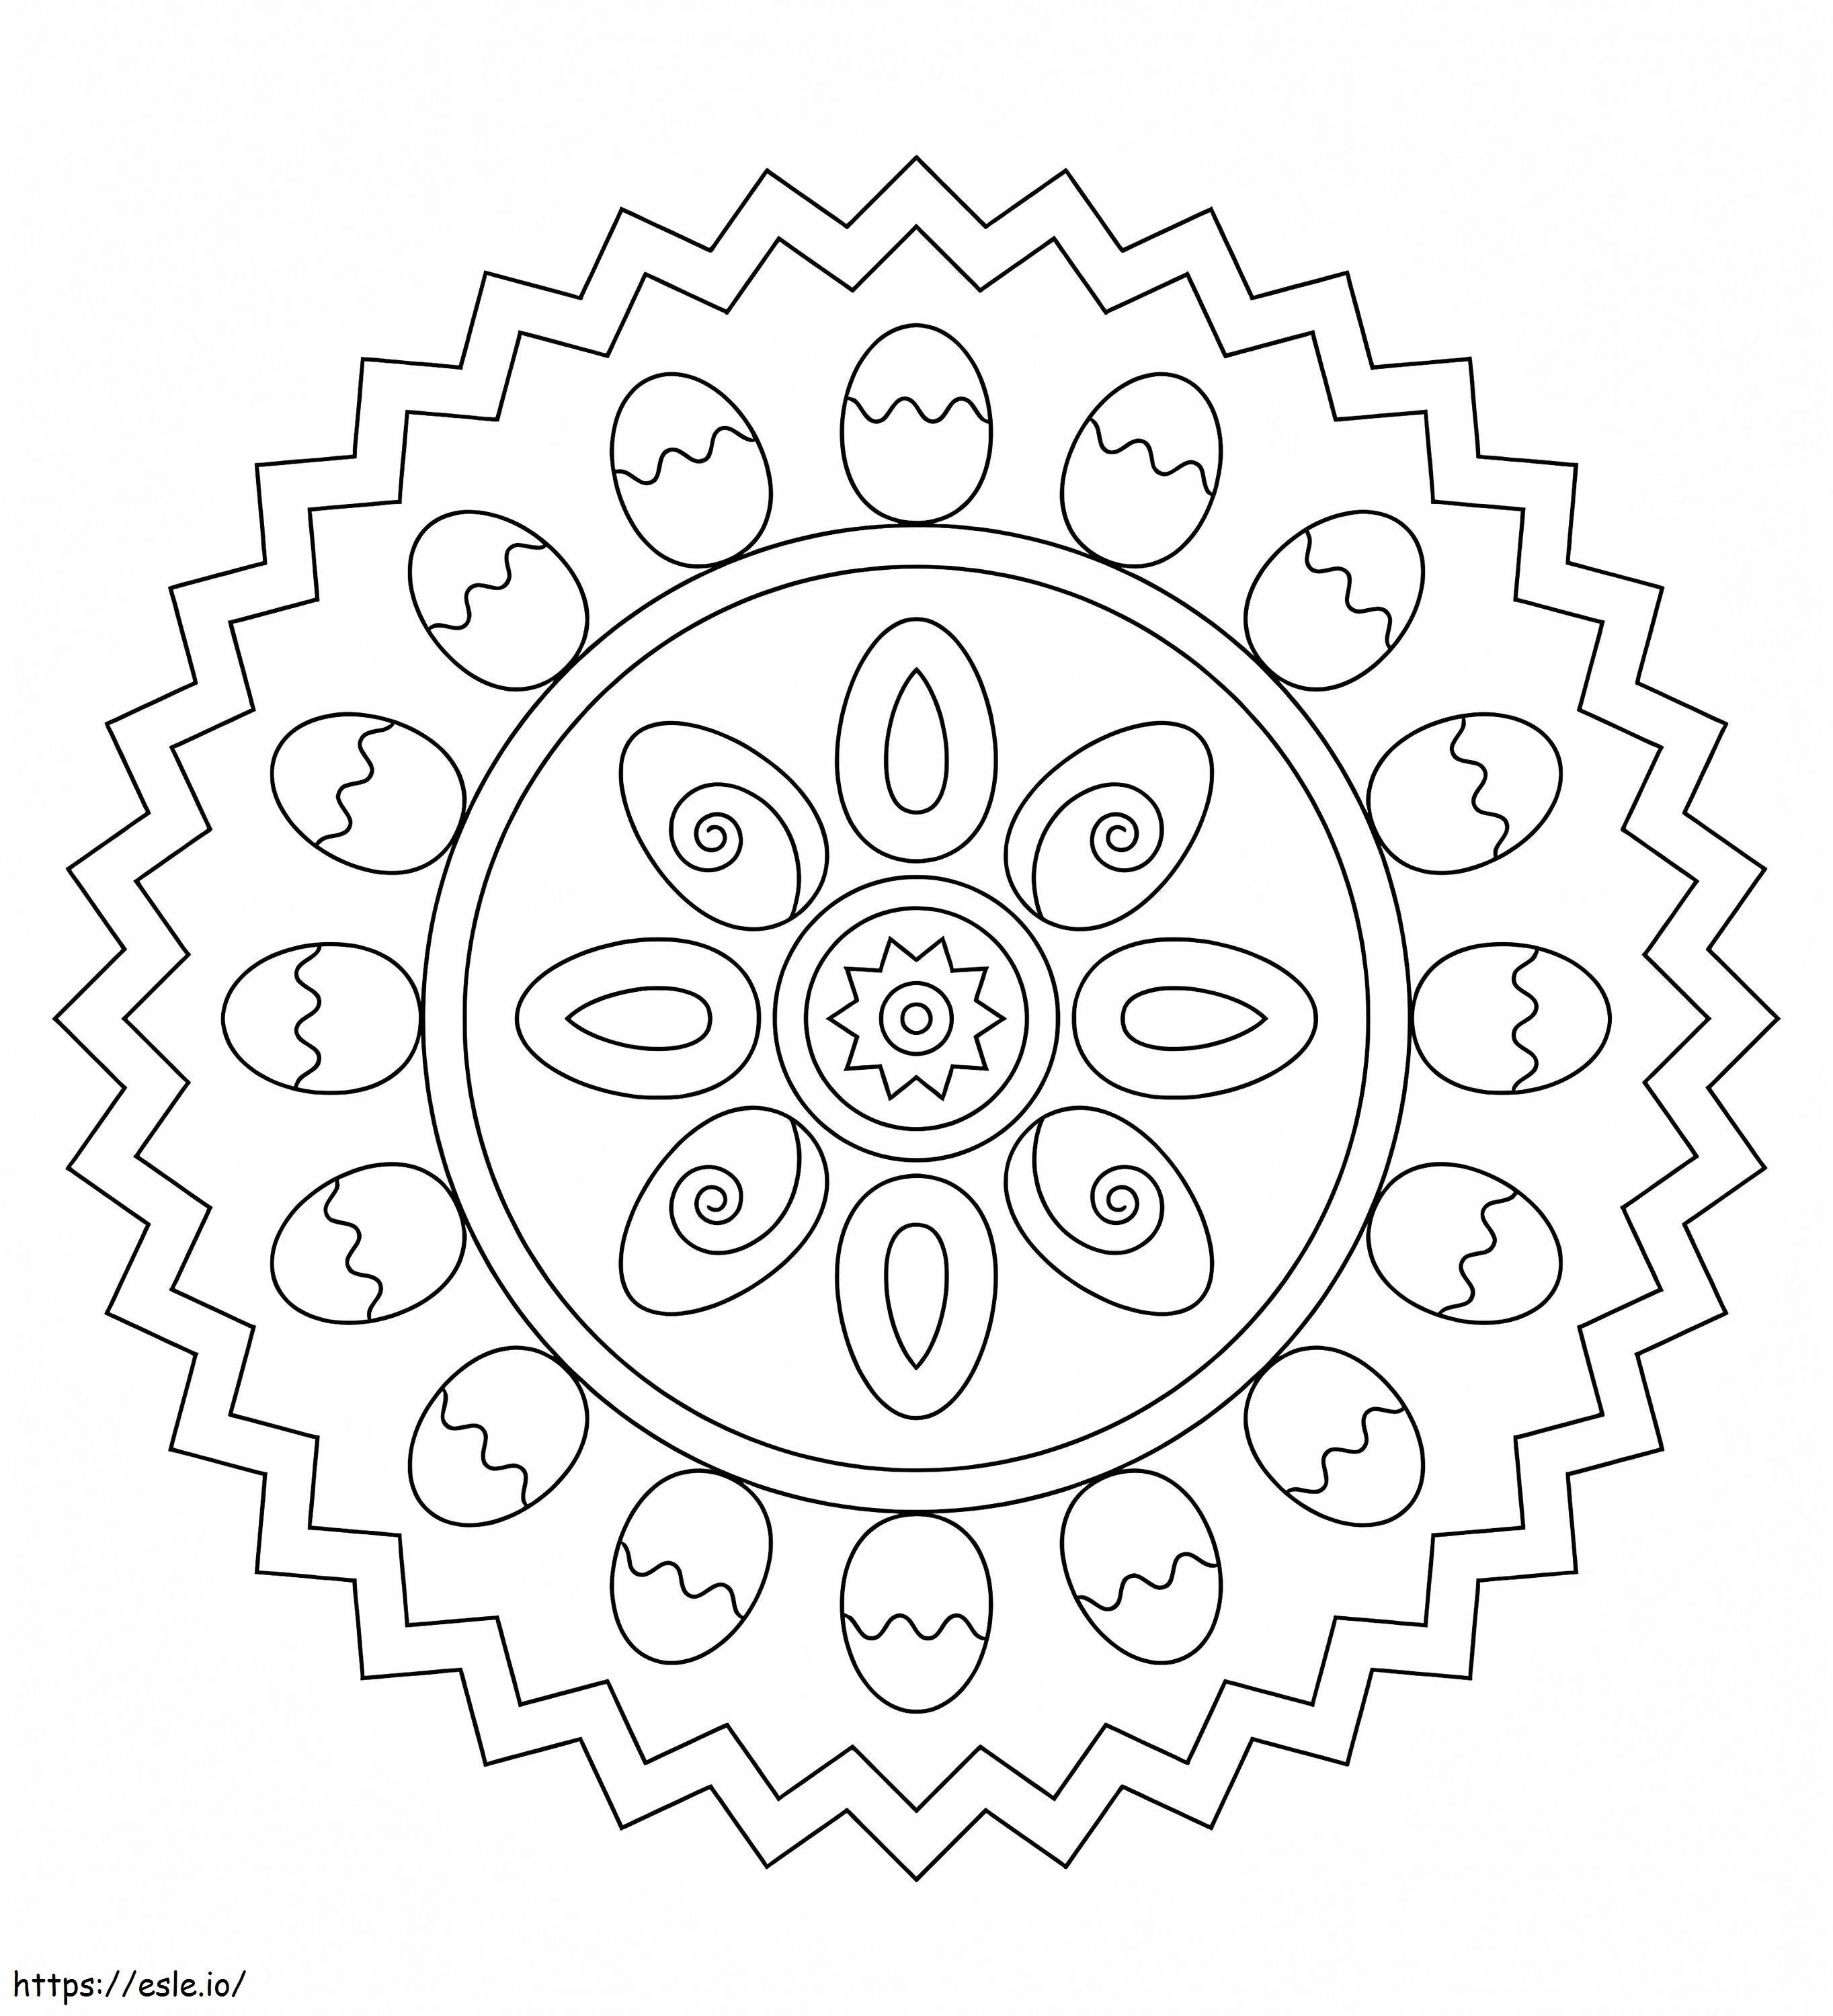 Nice Easter Mandala coloring page